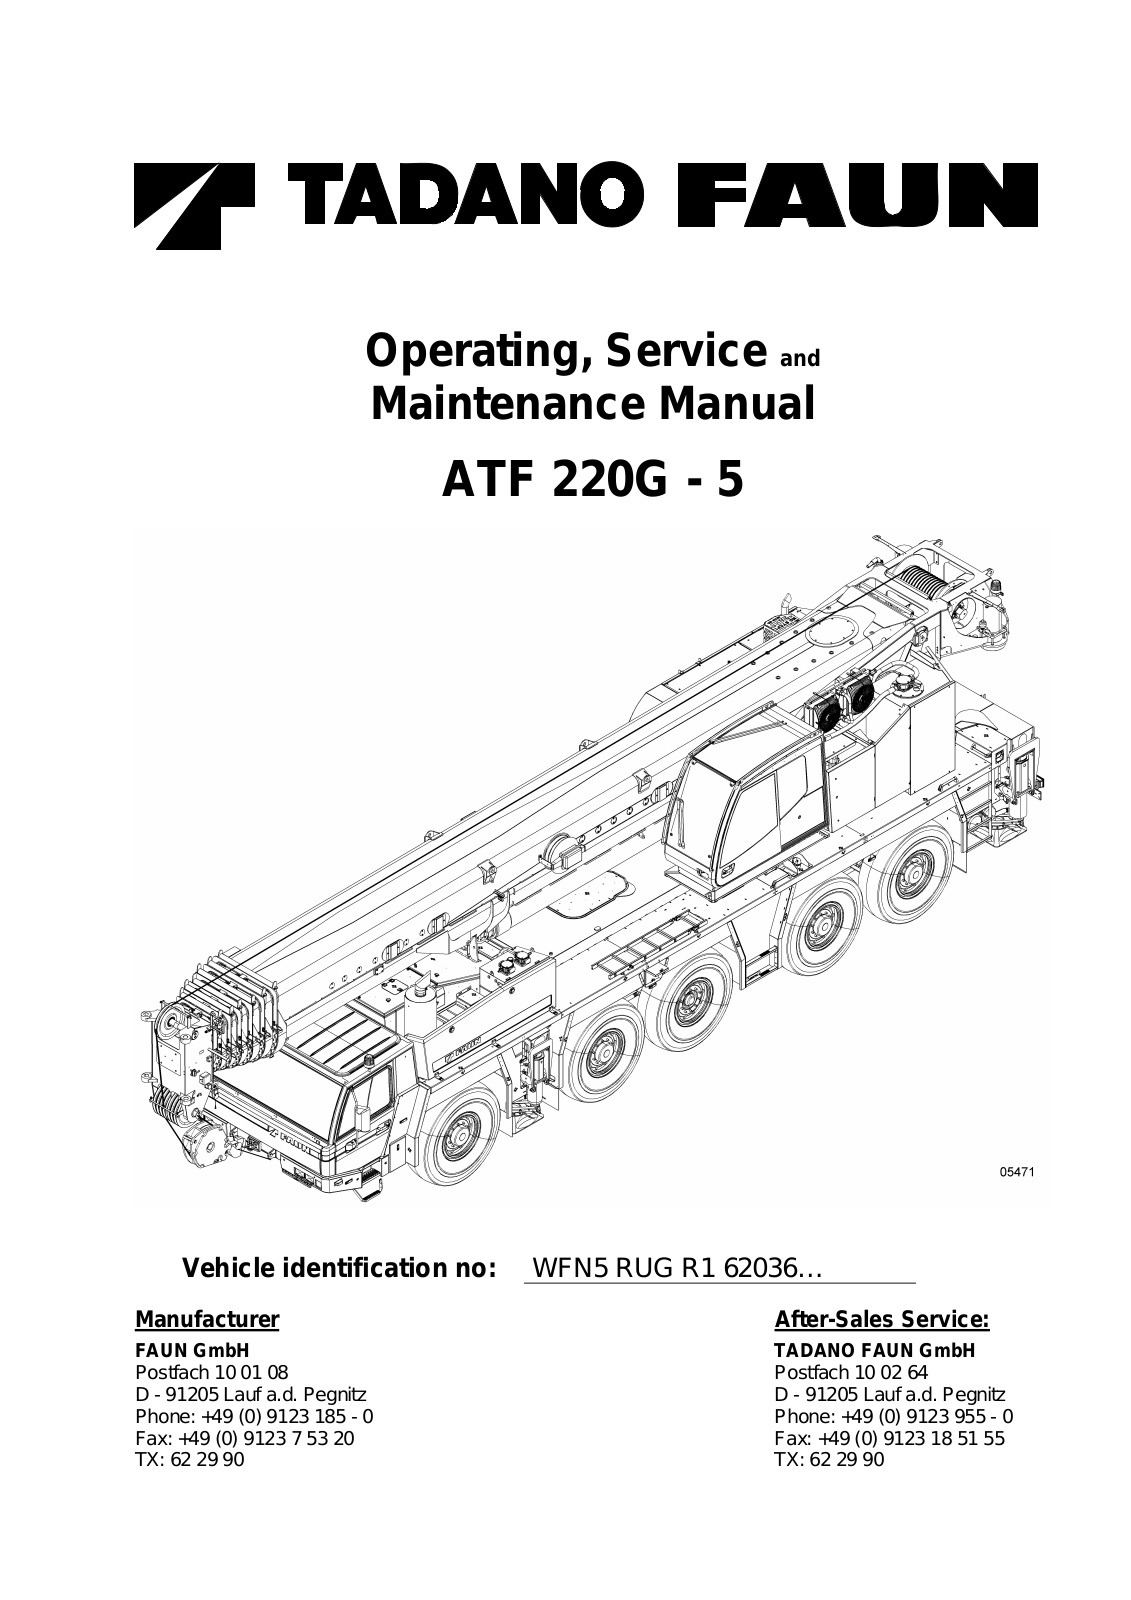 Tadano ATF 220G-5 Maintenance Manual